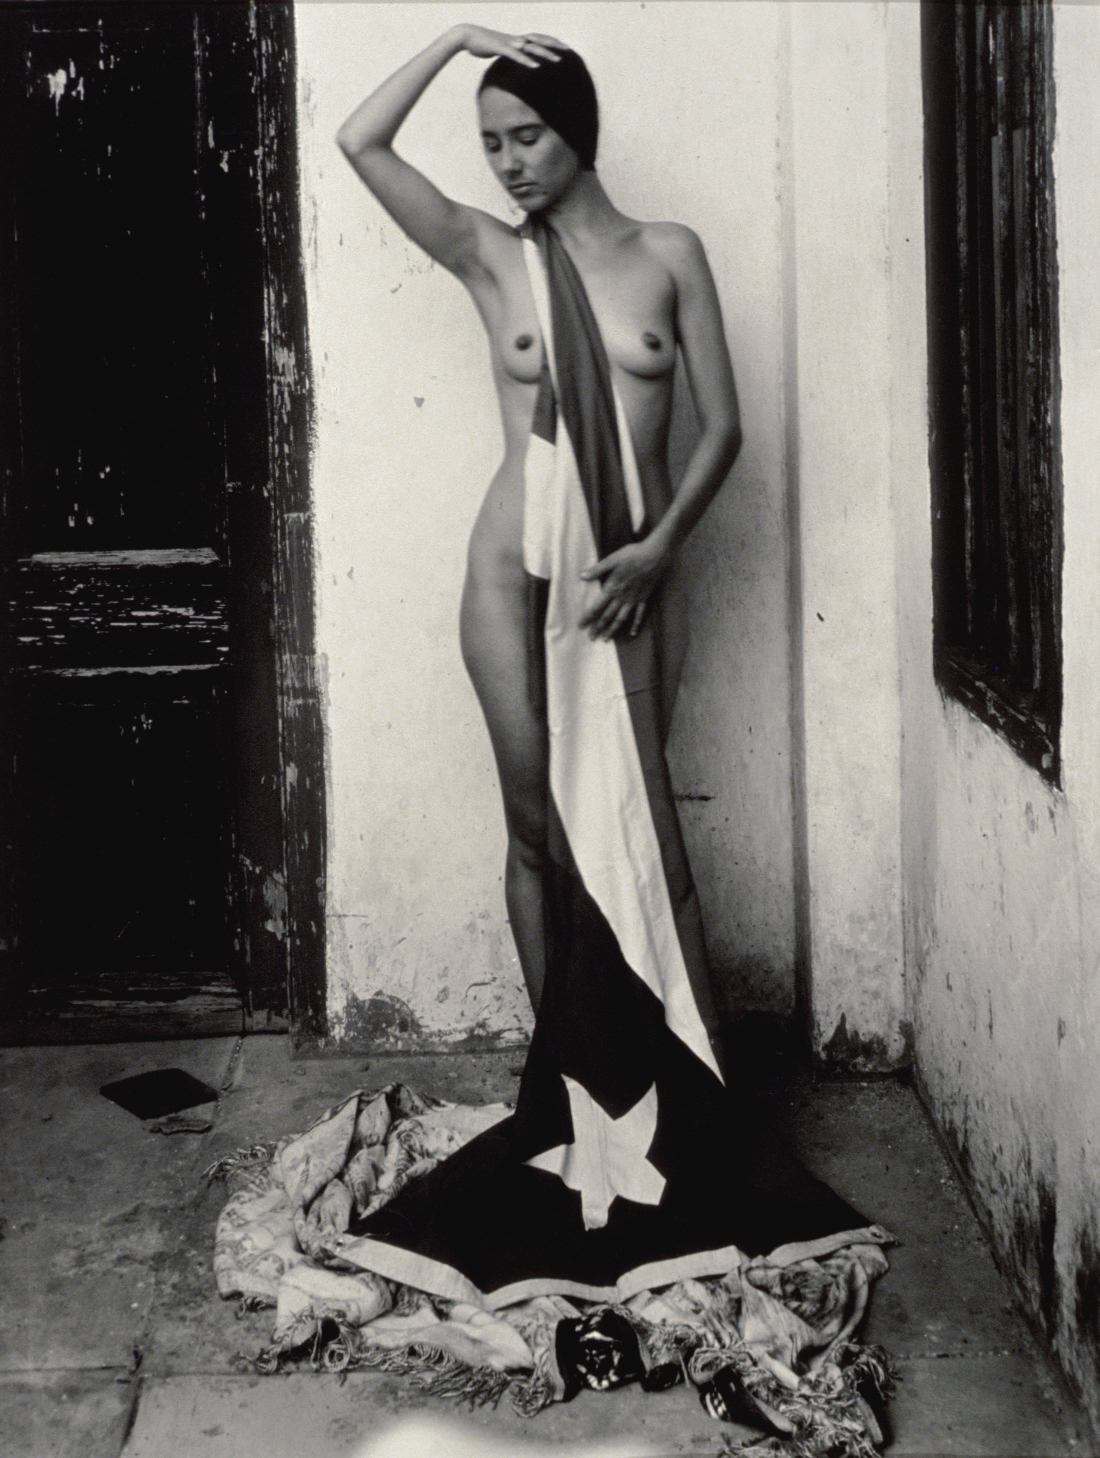 Cirenaica Moreira. Cuba waits for you. 1995. Courtesy of Lehigh University Galleries – Museum Operation. © Cirenaica Moreira.